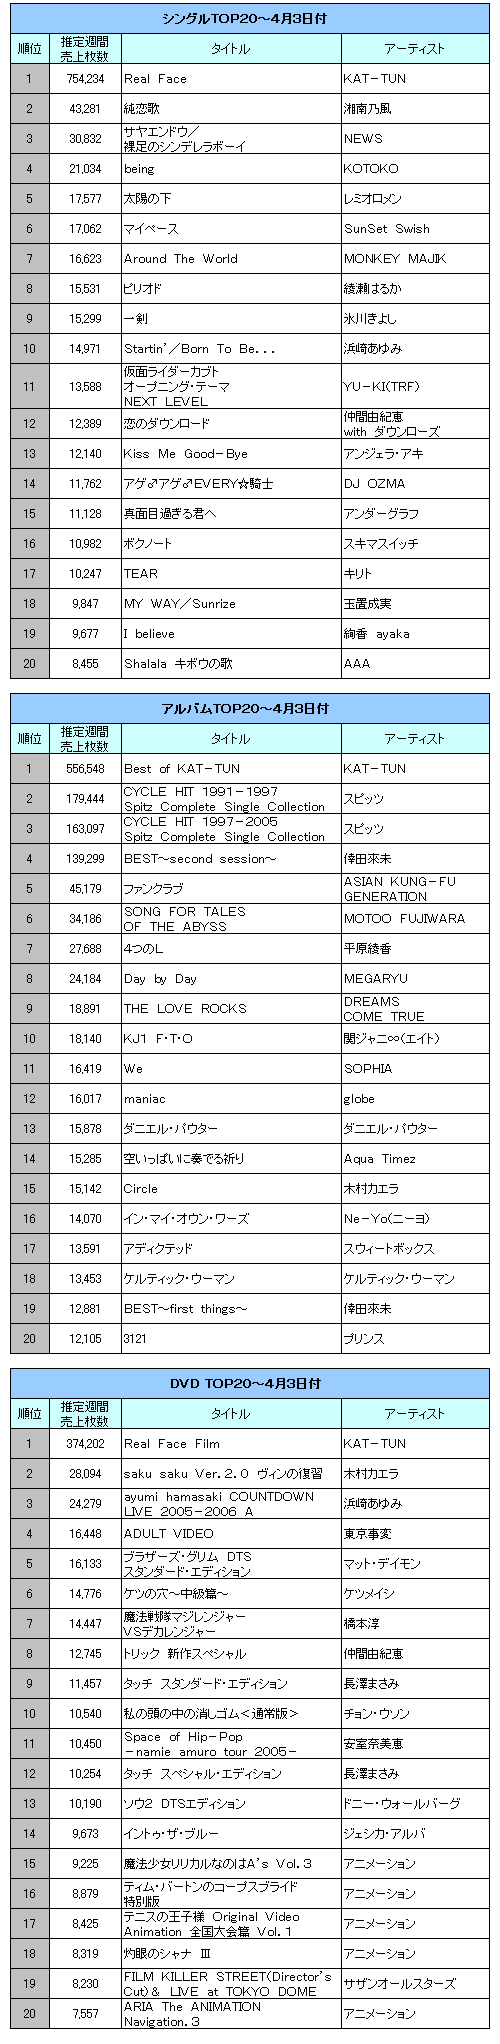 Kat Tun 3冠達成 シングル アルバム Dvd 同時制覇 Oricon News